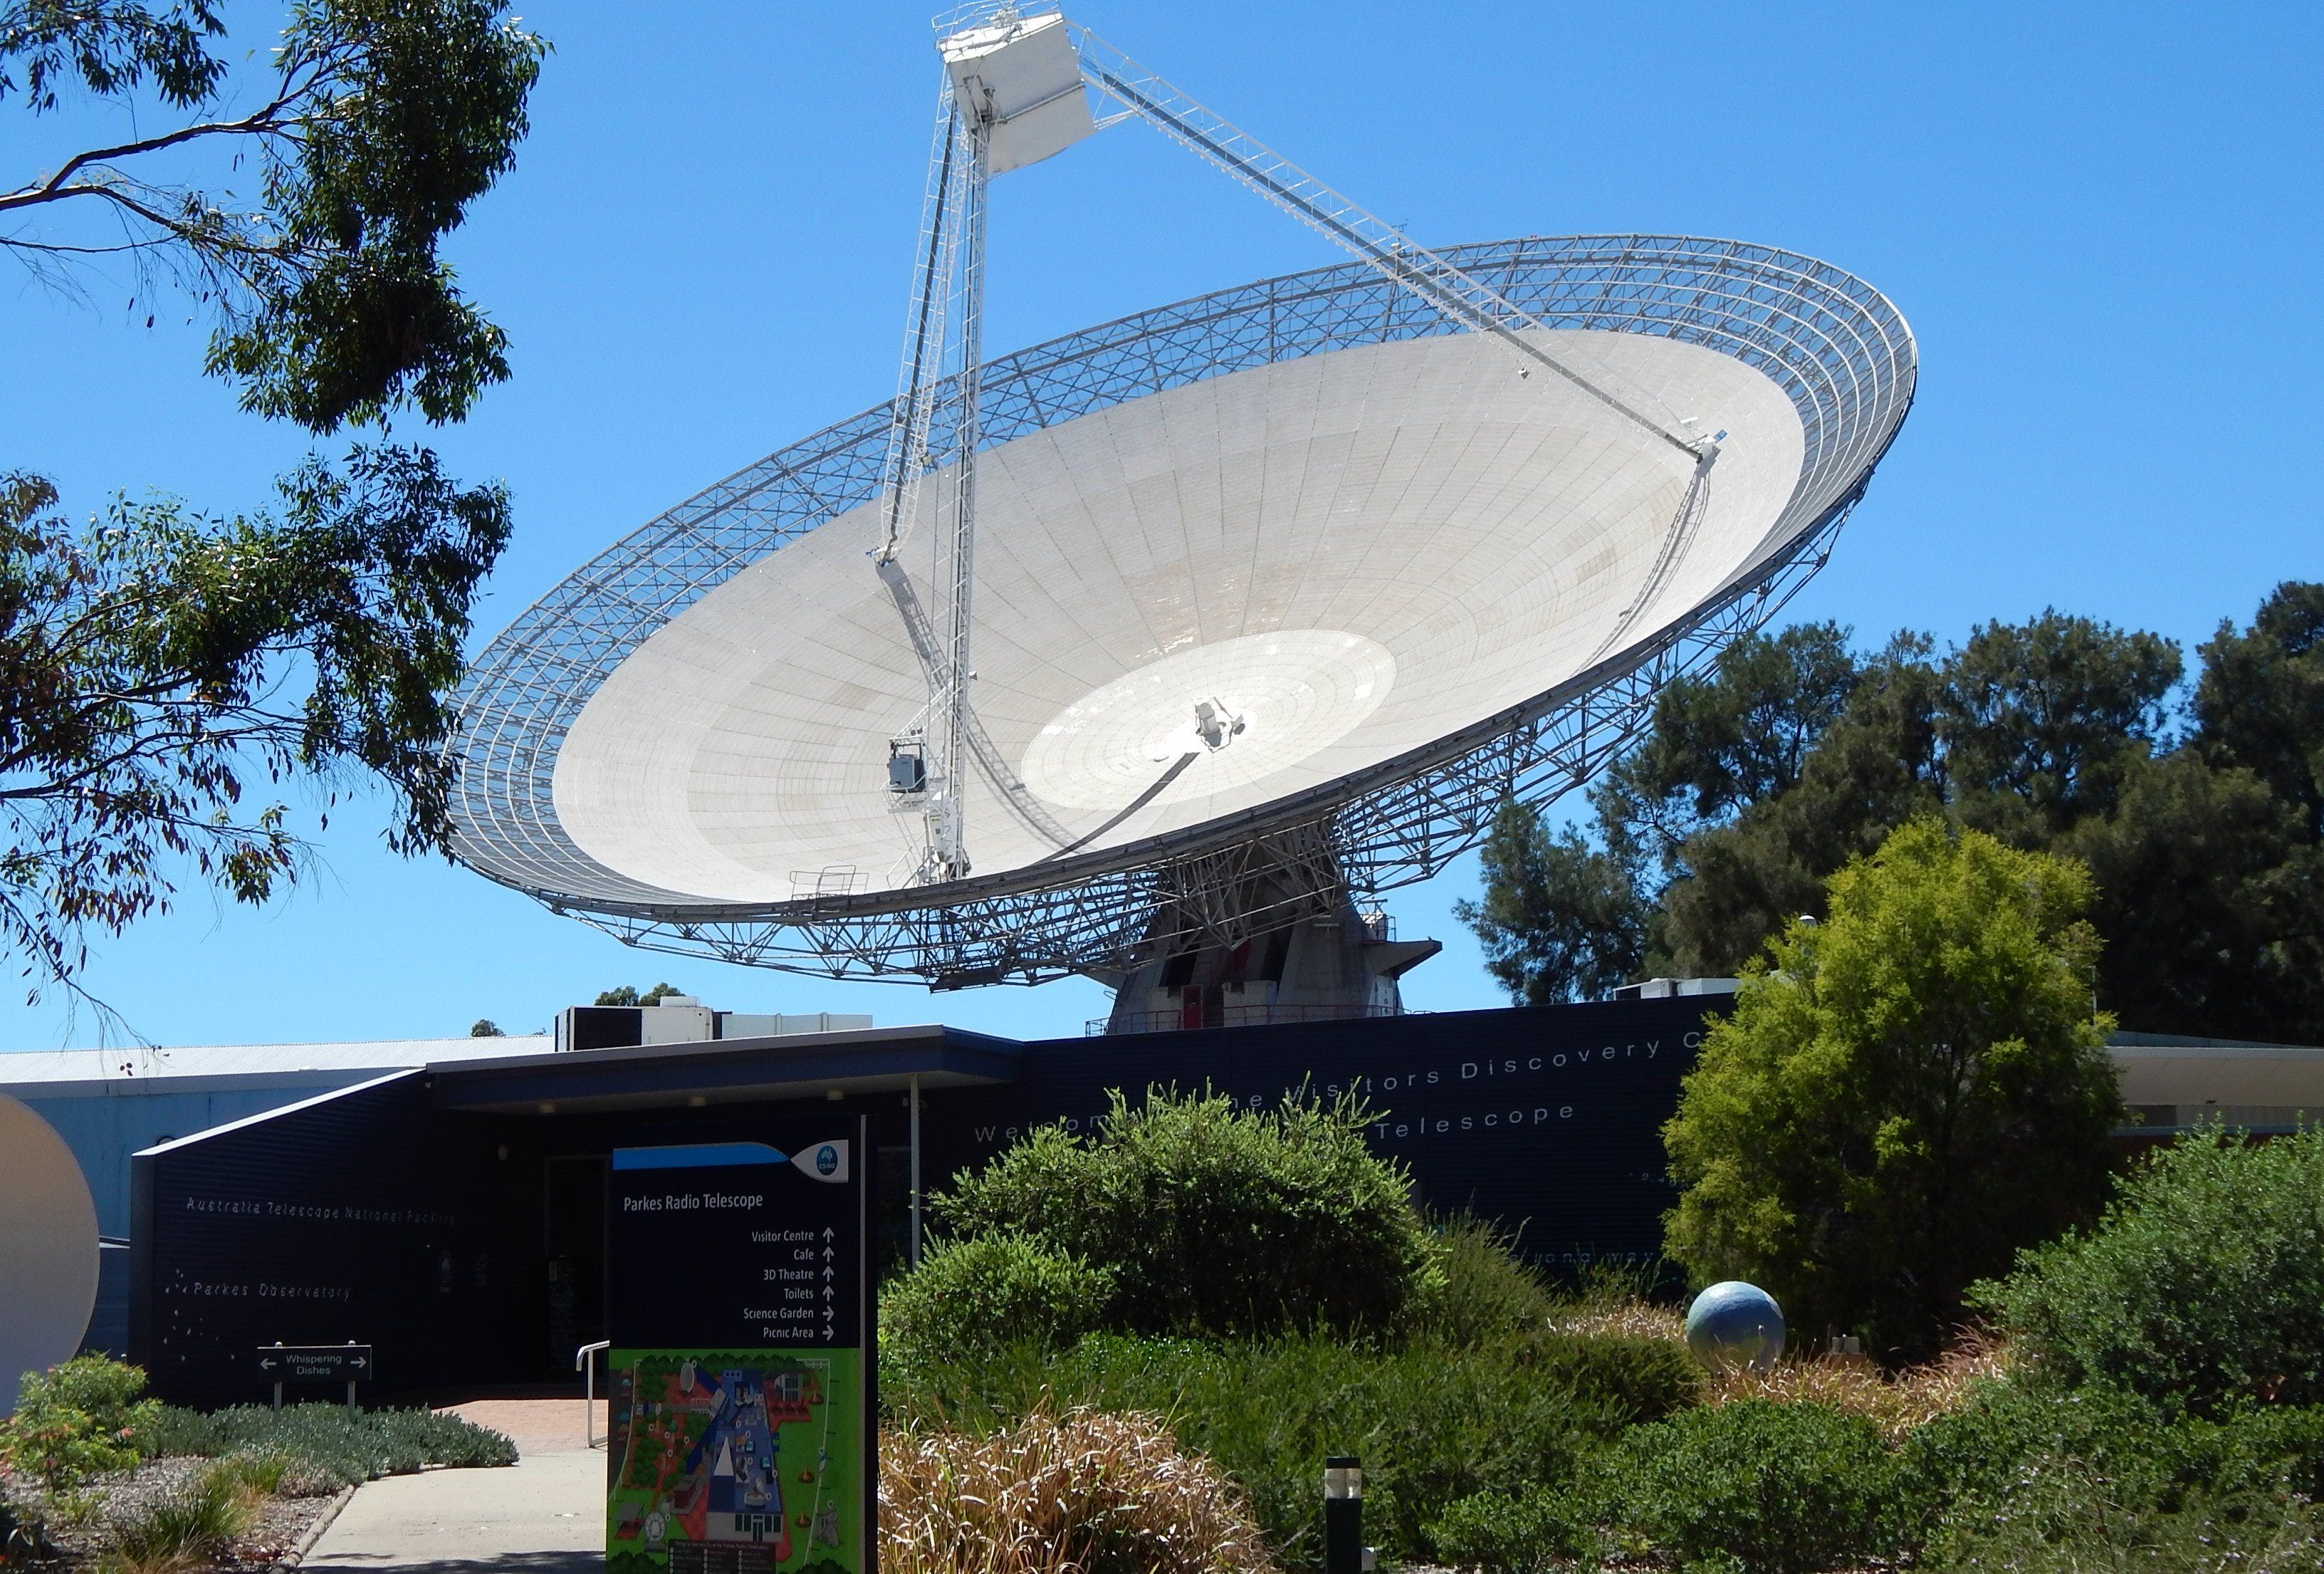 CSIRO Parkes Radio Telescope Visitor Centre - Accommodation in Surfers Paradise